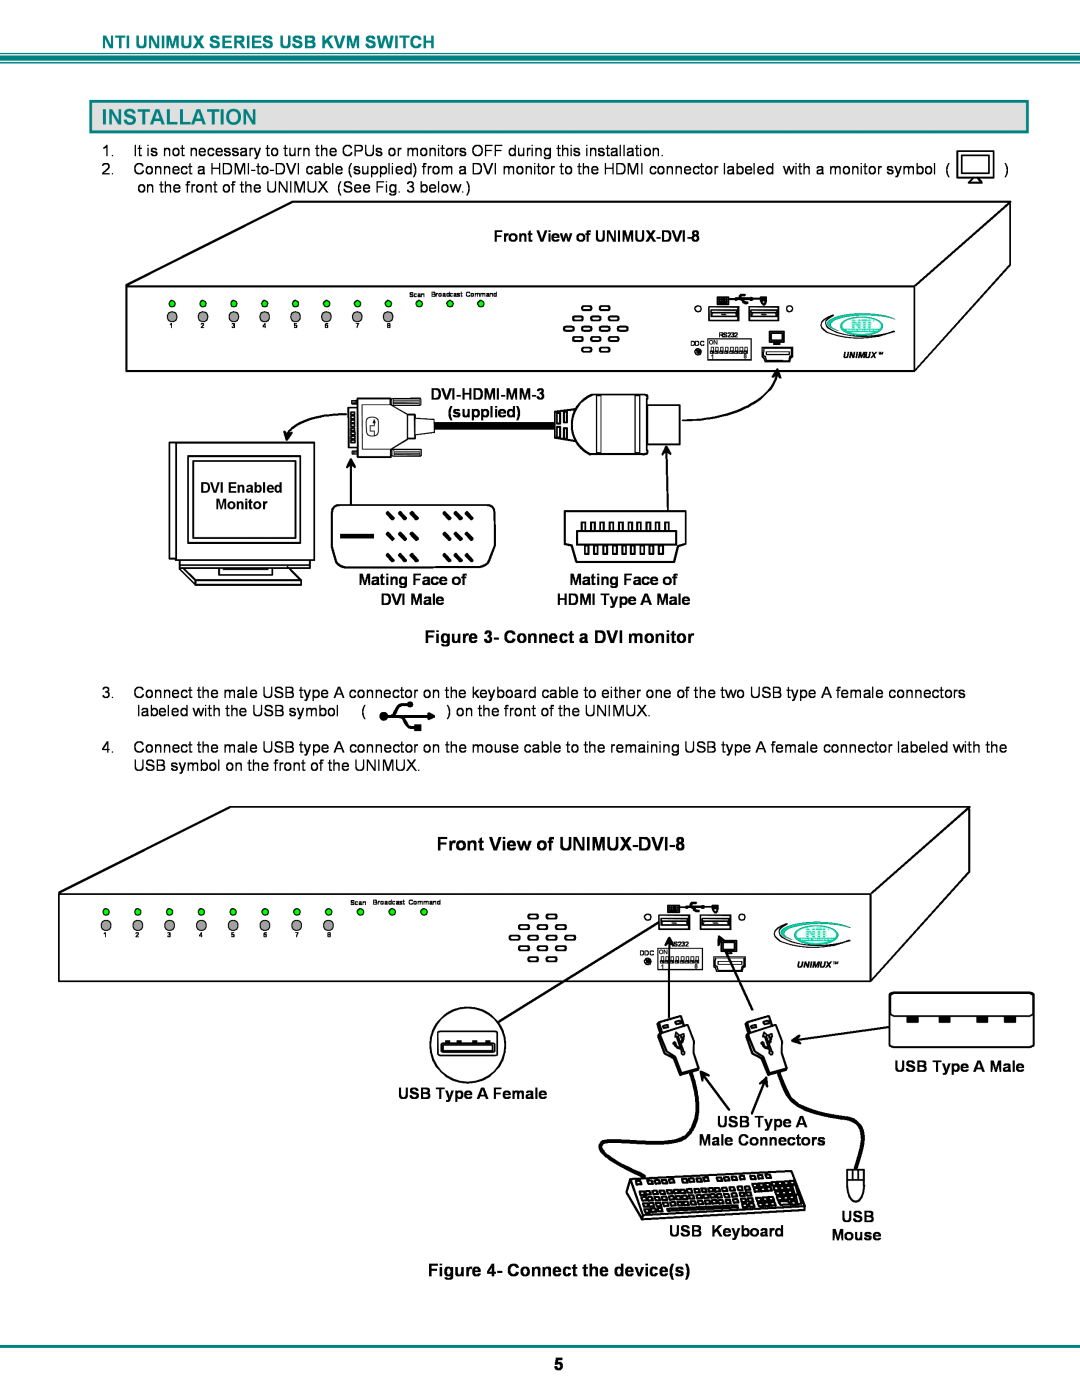 Network Technologies USB DVI KVM, UNIMUX-DVI-x Installation, Front View of UNIMUX-DVI-8, Nti Unimux Series Usb Kvm Switch 